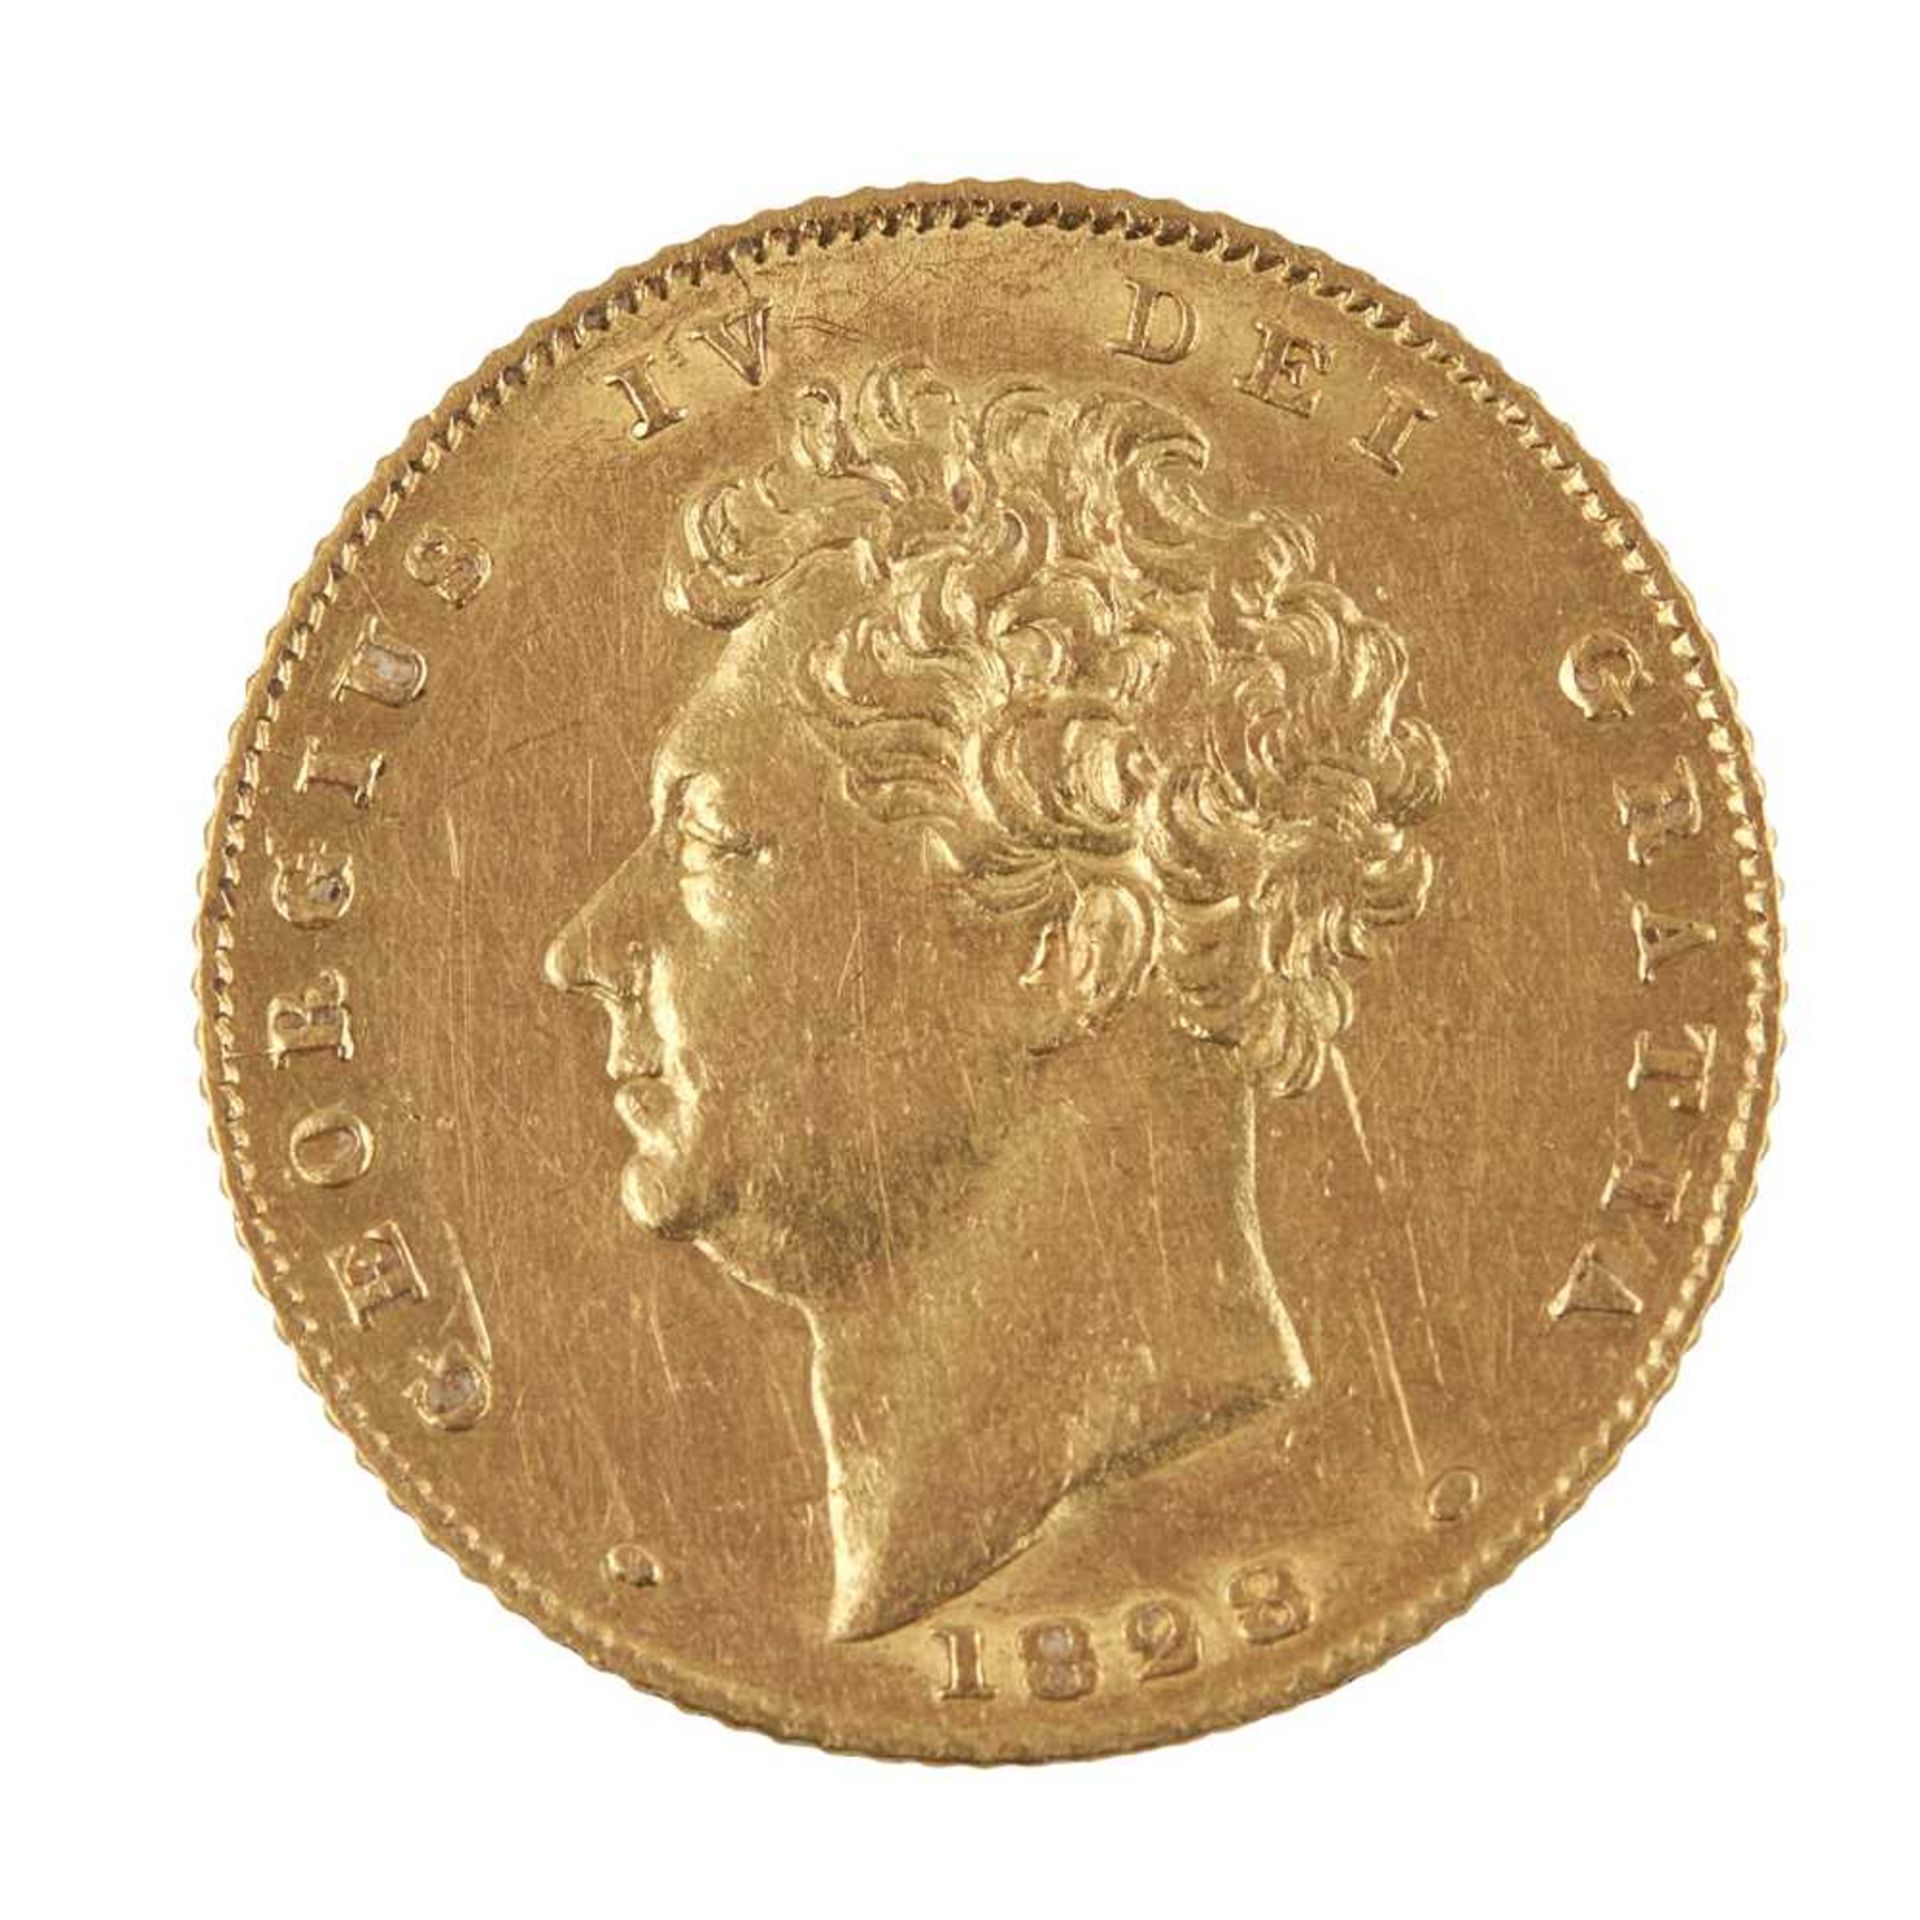 A George IV half sovereign